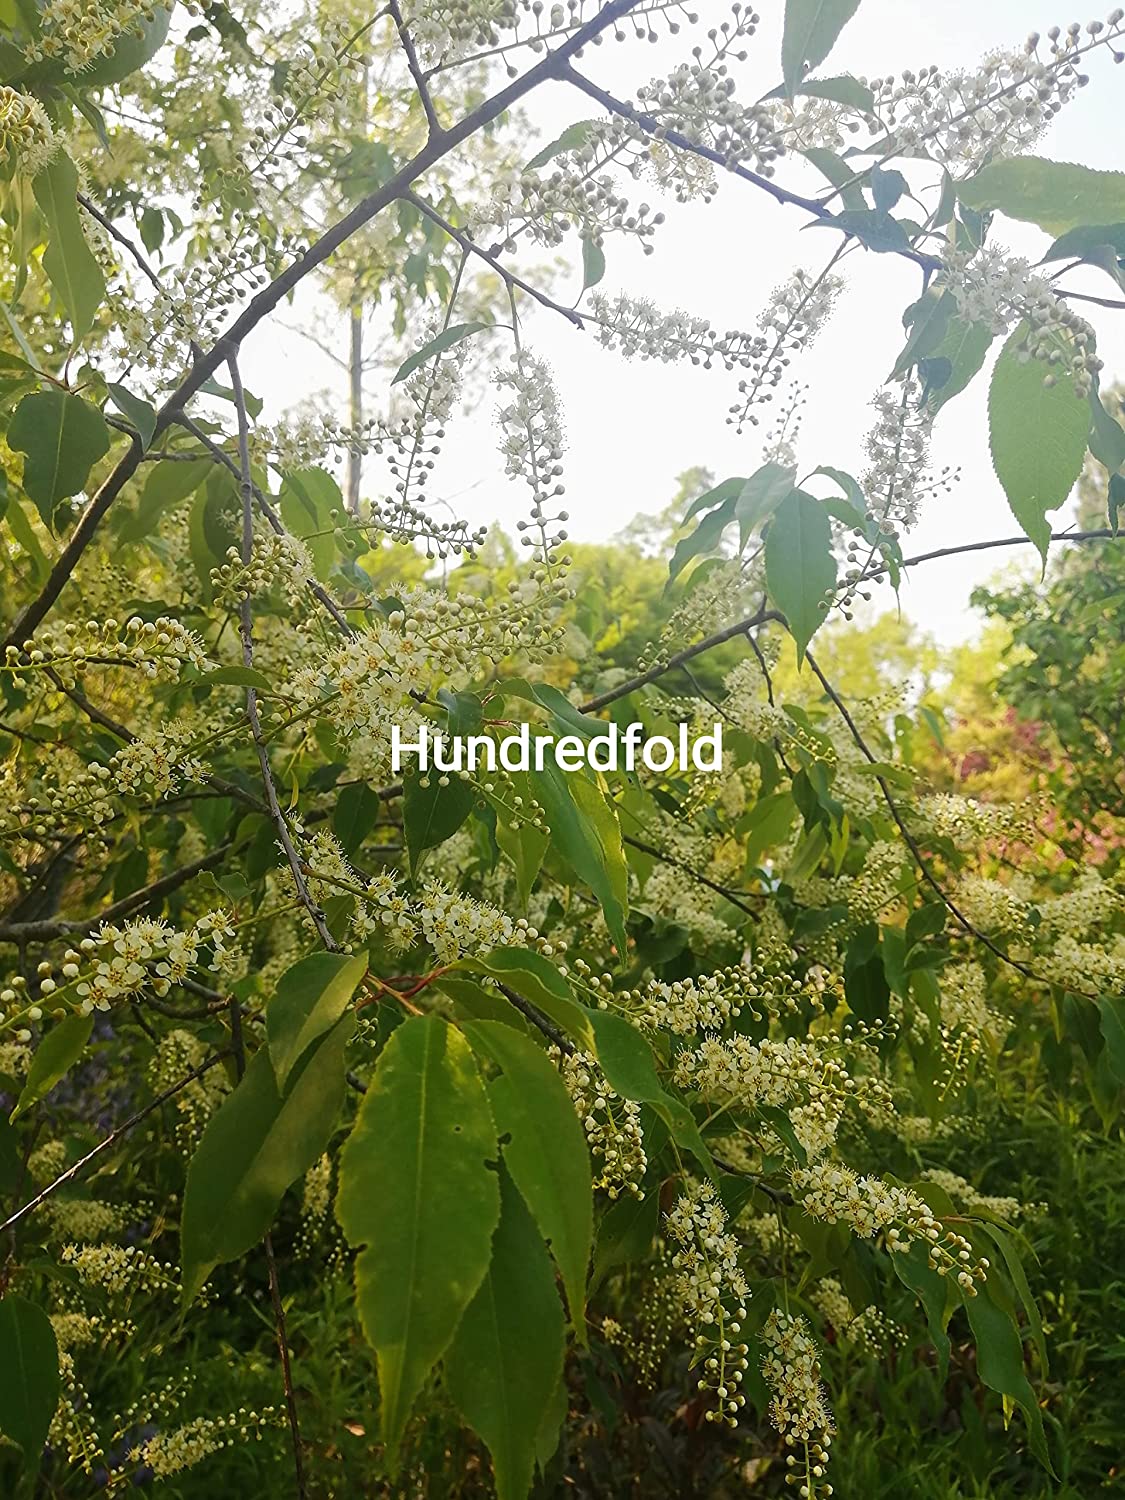 Hundredfold Black Cherry Tree 10 Seeds - Prunus serotina Canada Native Wild Black Cherry Rum Cherry, Producing Nice Fall Colors & Valuable Wood